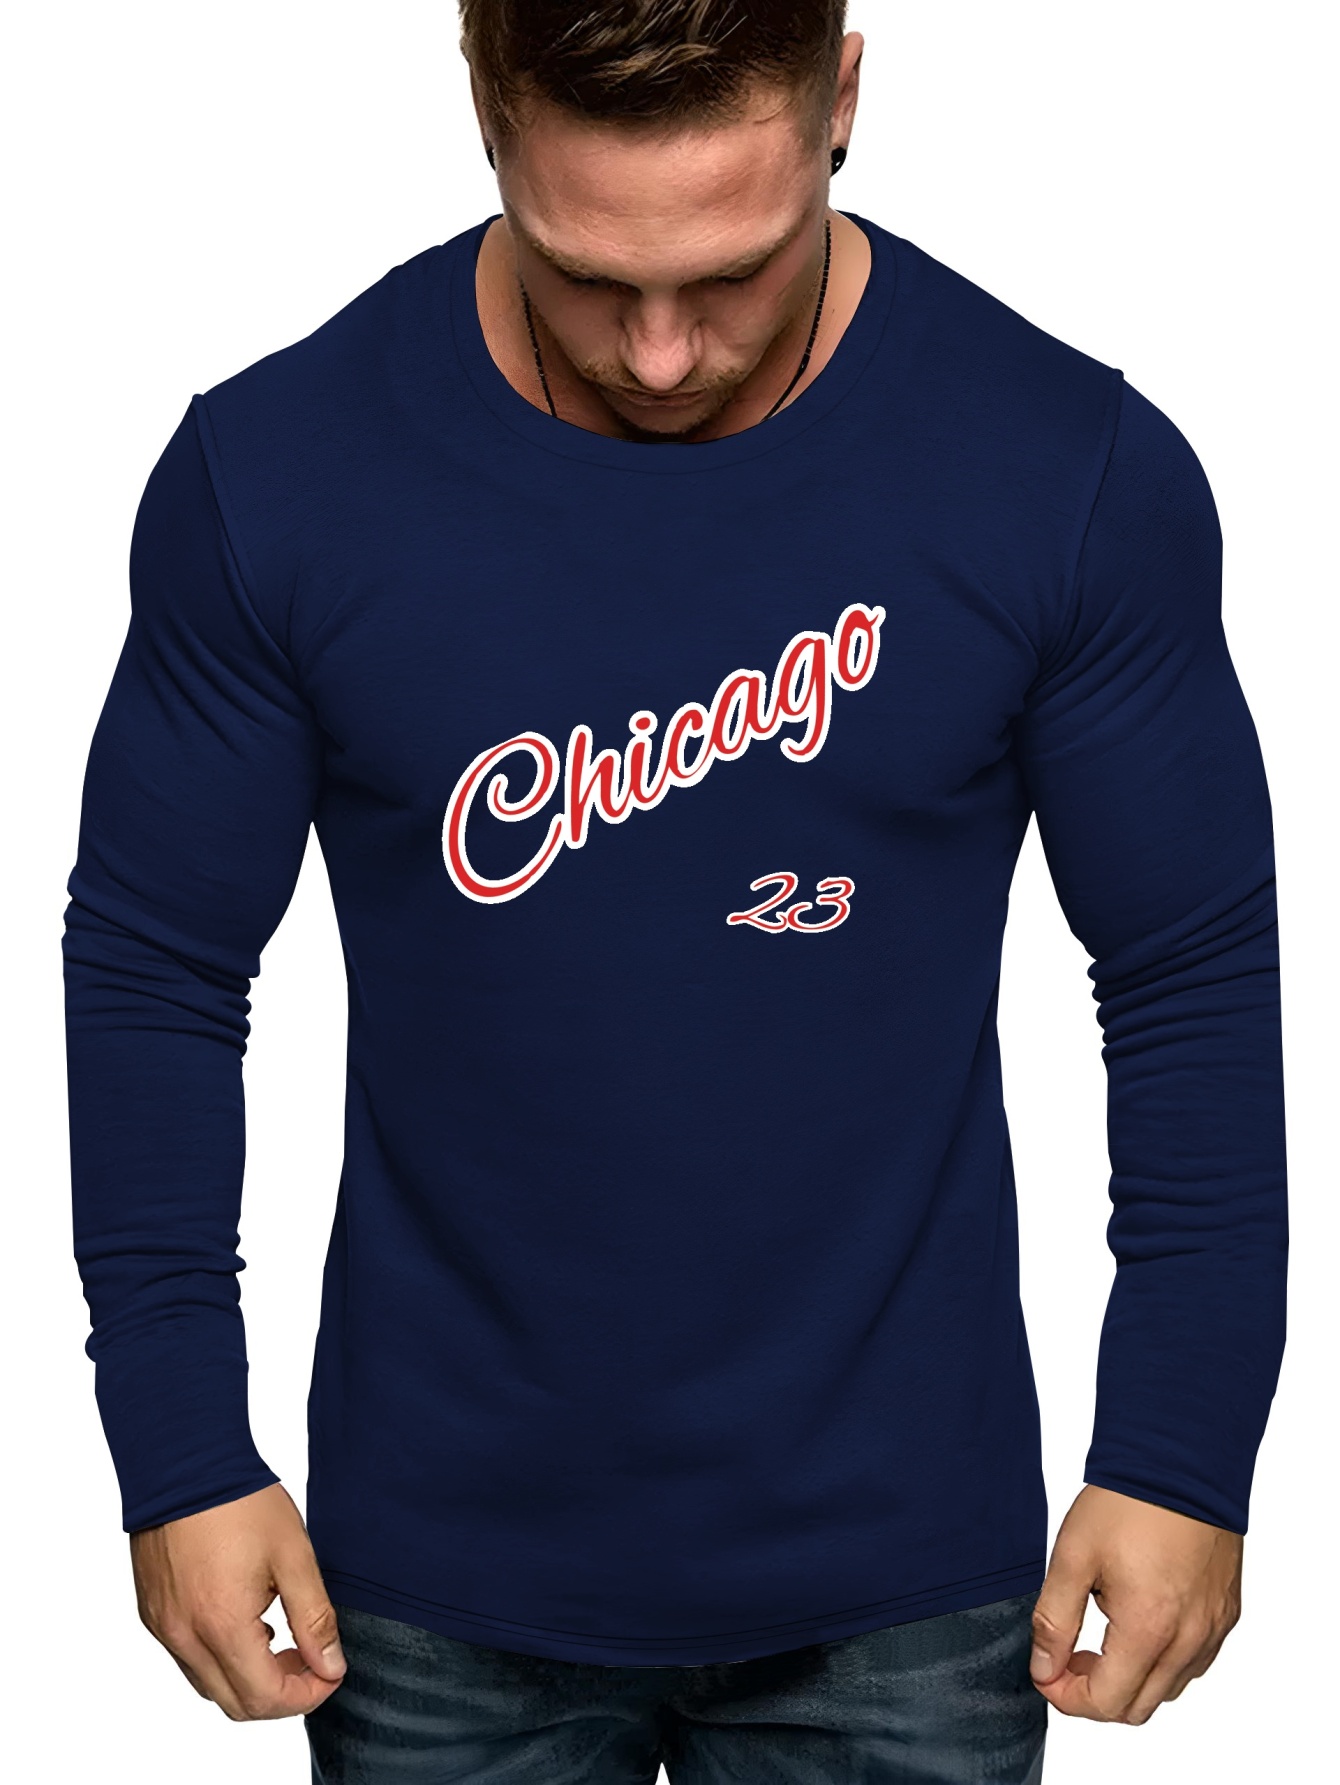 Chicago Cubs Spring Training 2023 3/4 Royal Blue Sleeve Raglan Unisex S